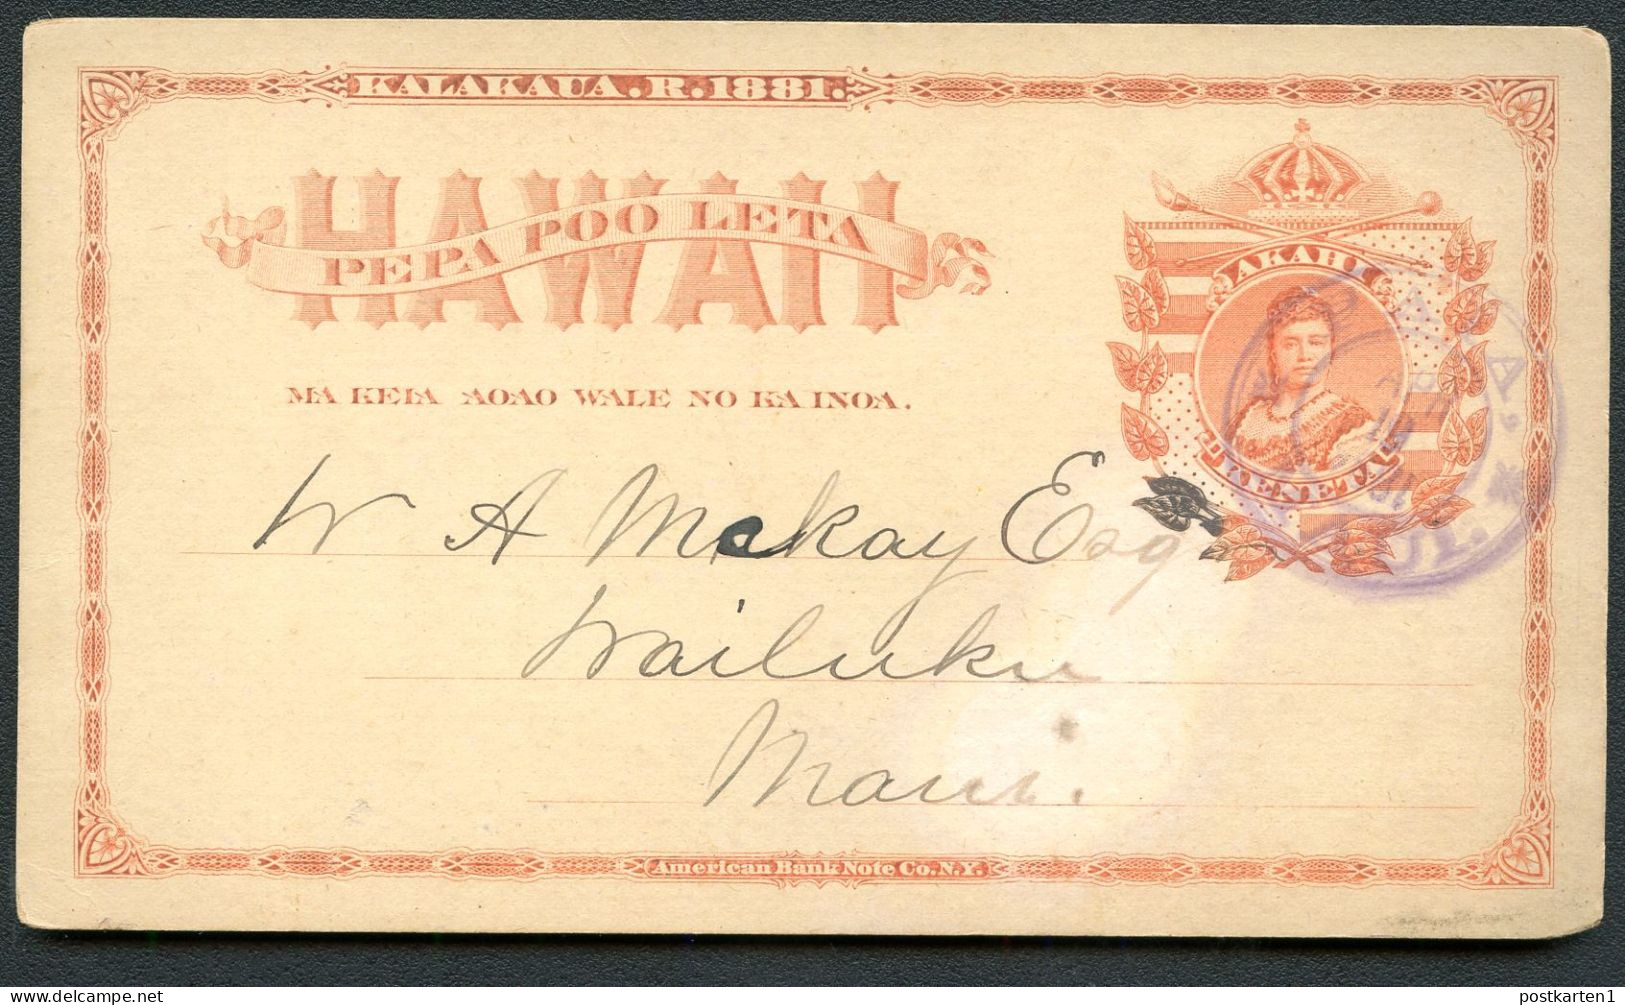 Hawaii Postal Card UX1 Paia Maui YEAR INVERTED - Wailuku Maui 1894 - Hawaï